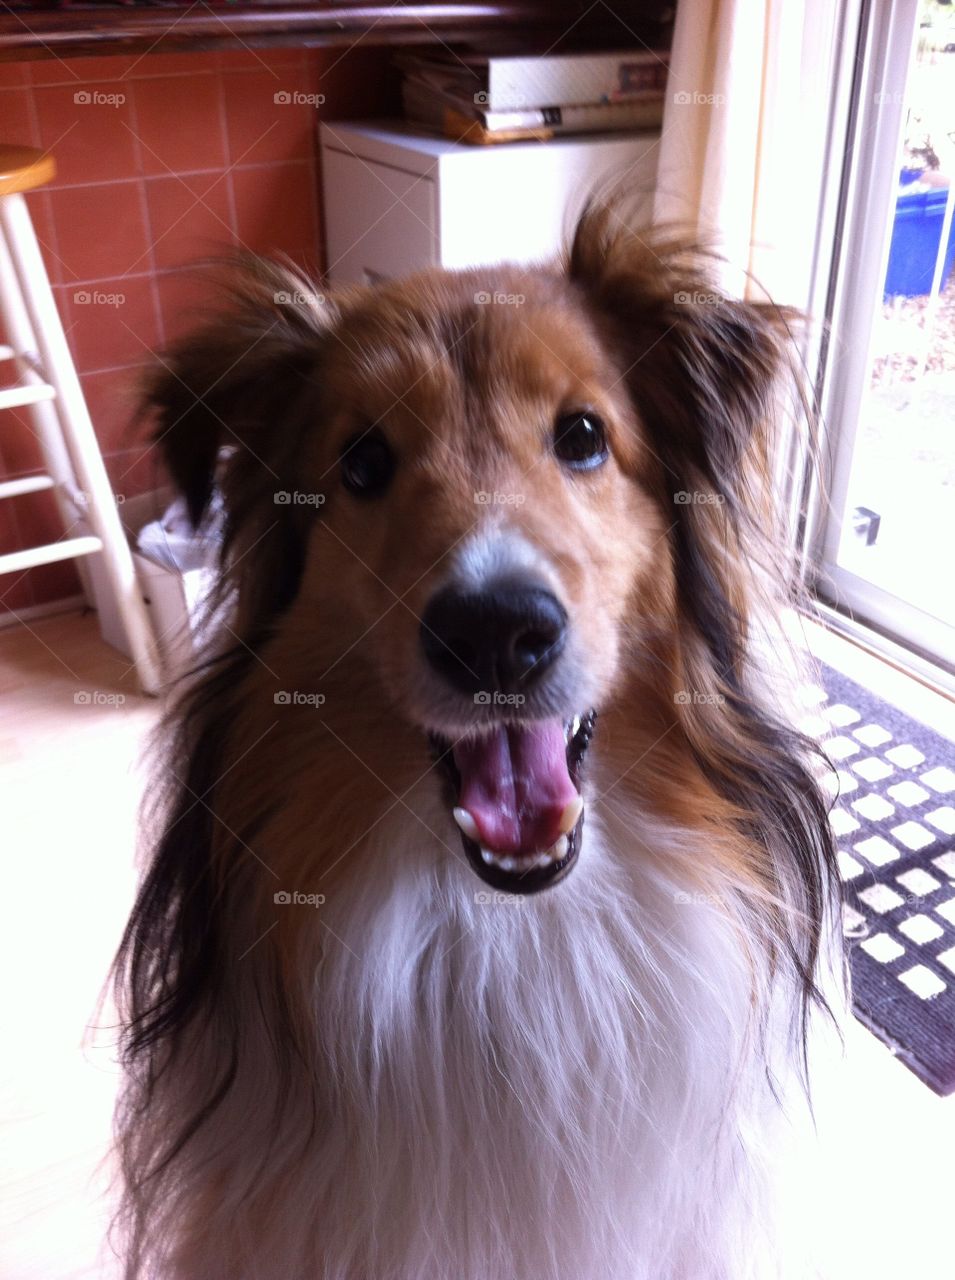 My Sheltie Dog - Jax smiling 